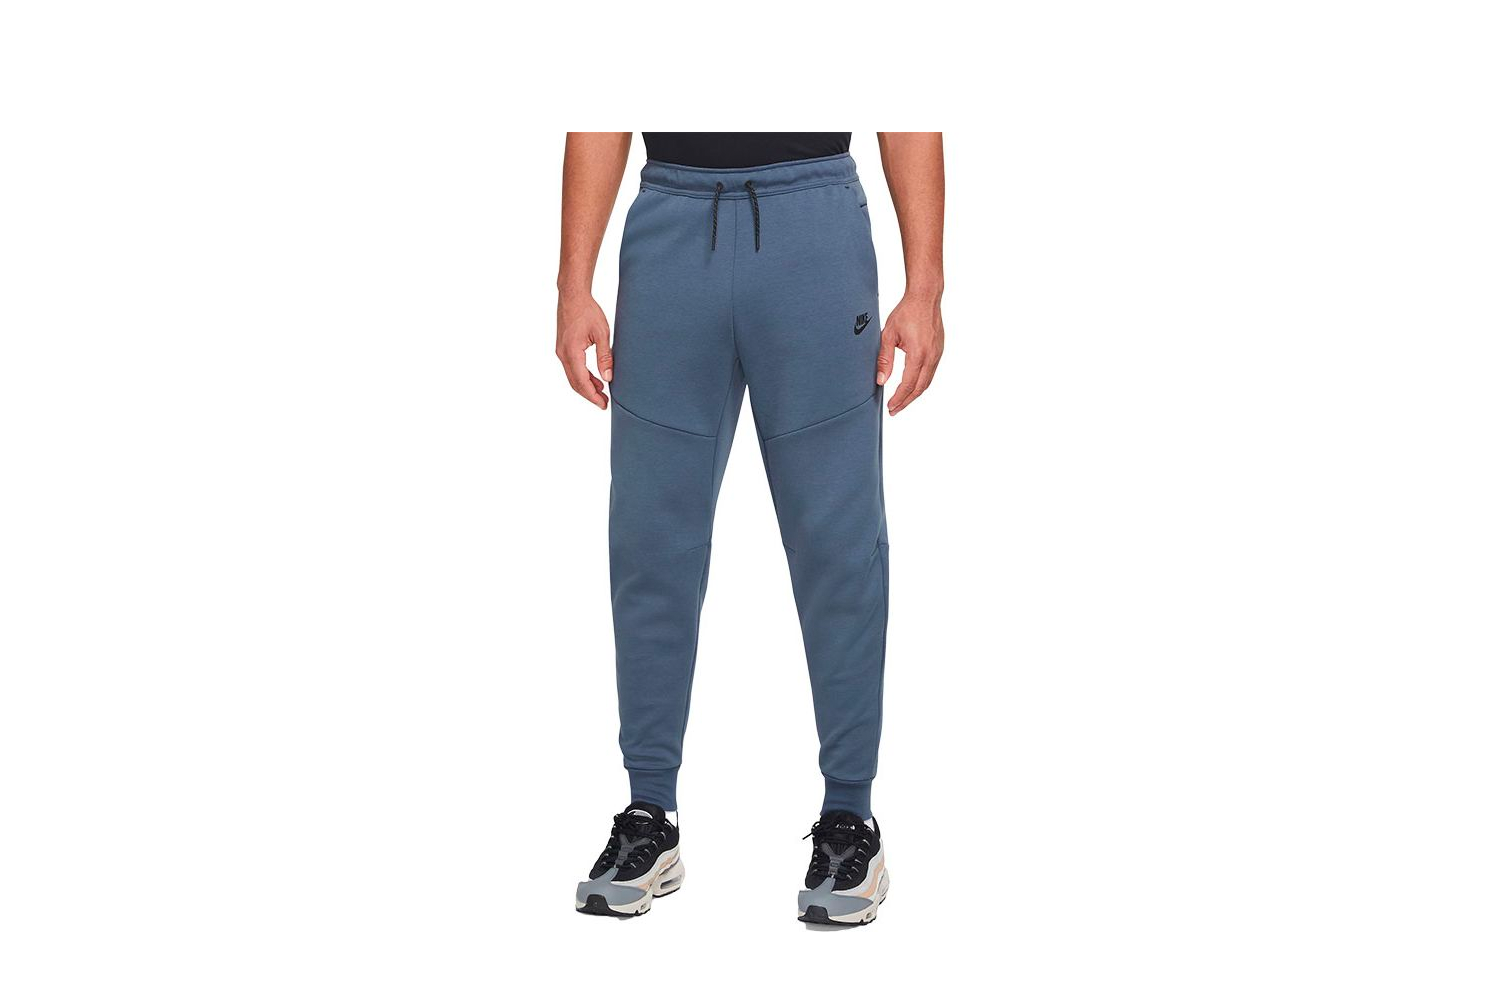 Blue Joggers & Sweatpants. Nike CA